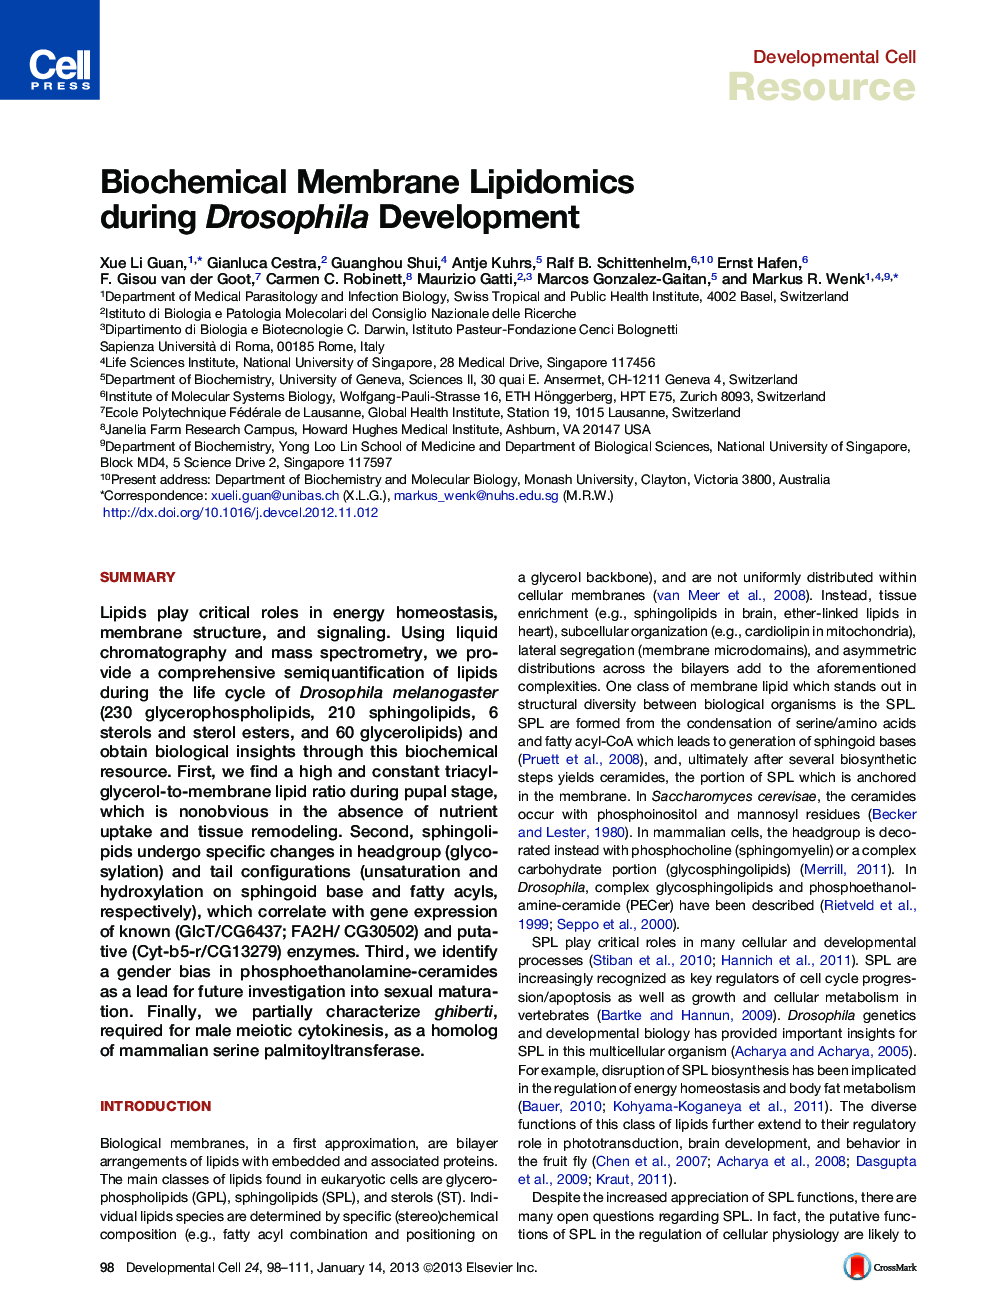 Biochemical Membrane Lipidomics during Drosophila Development